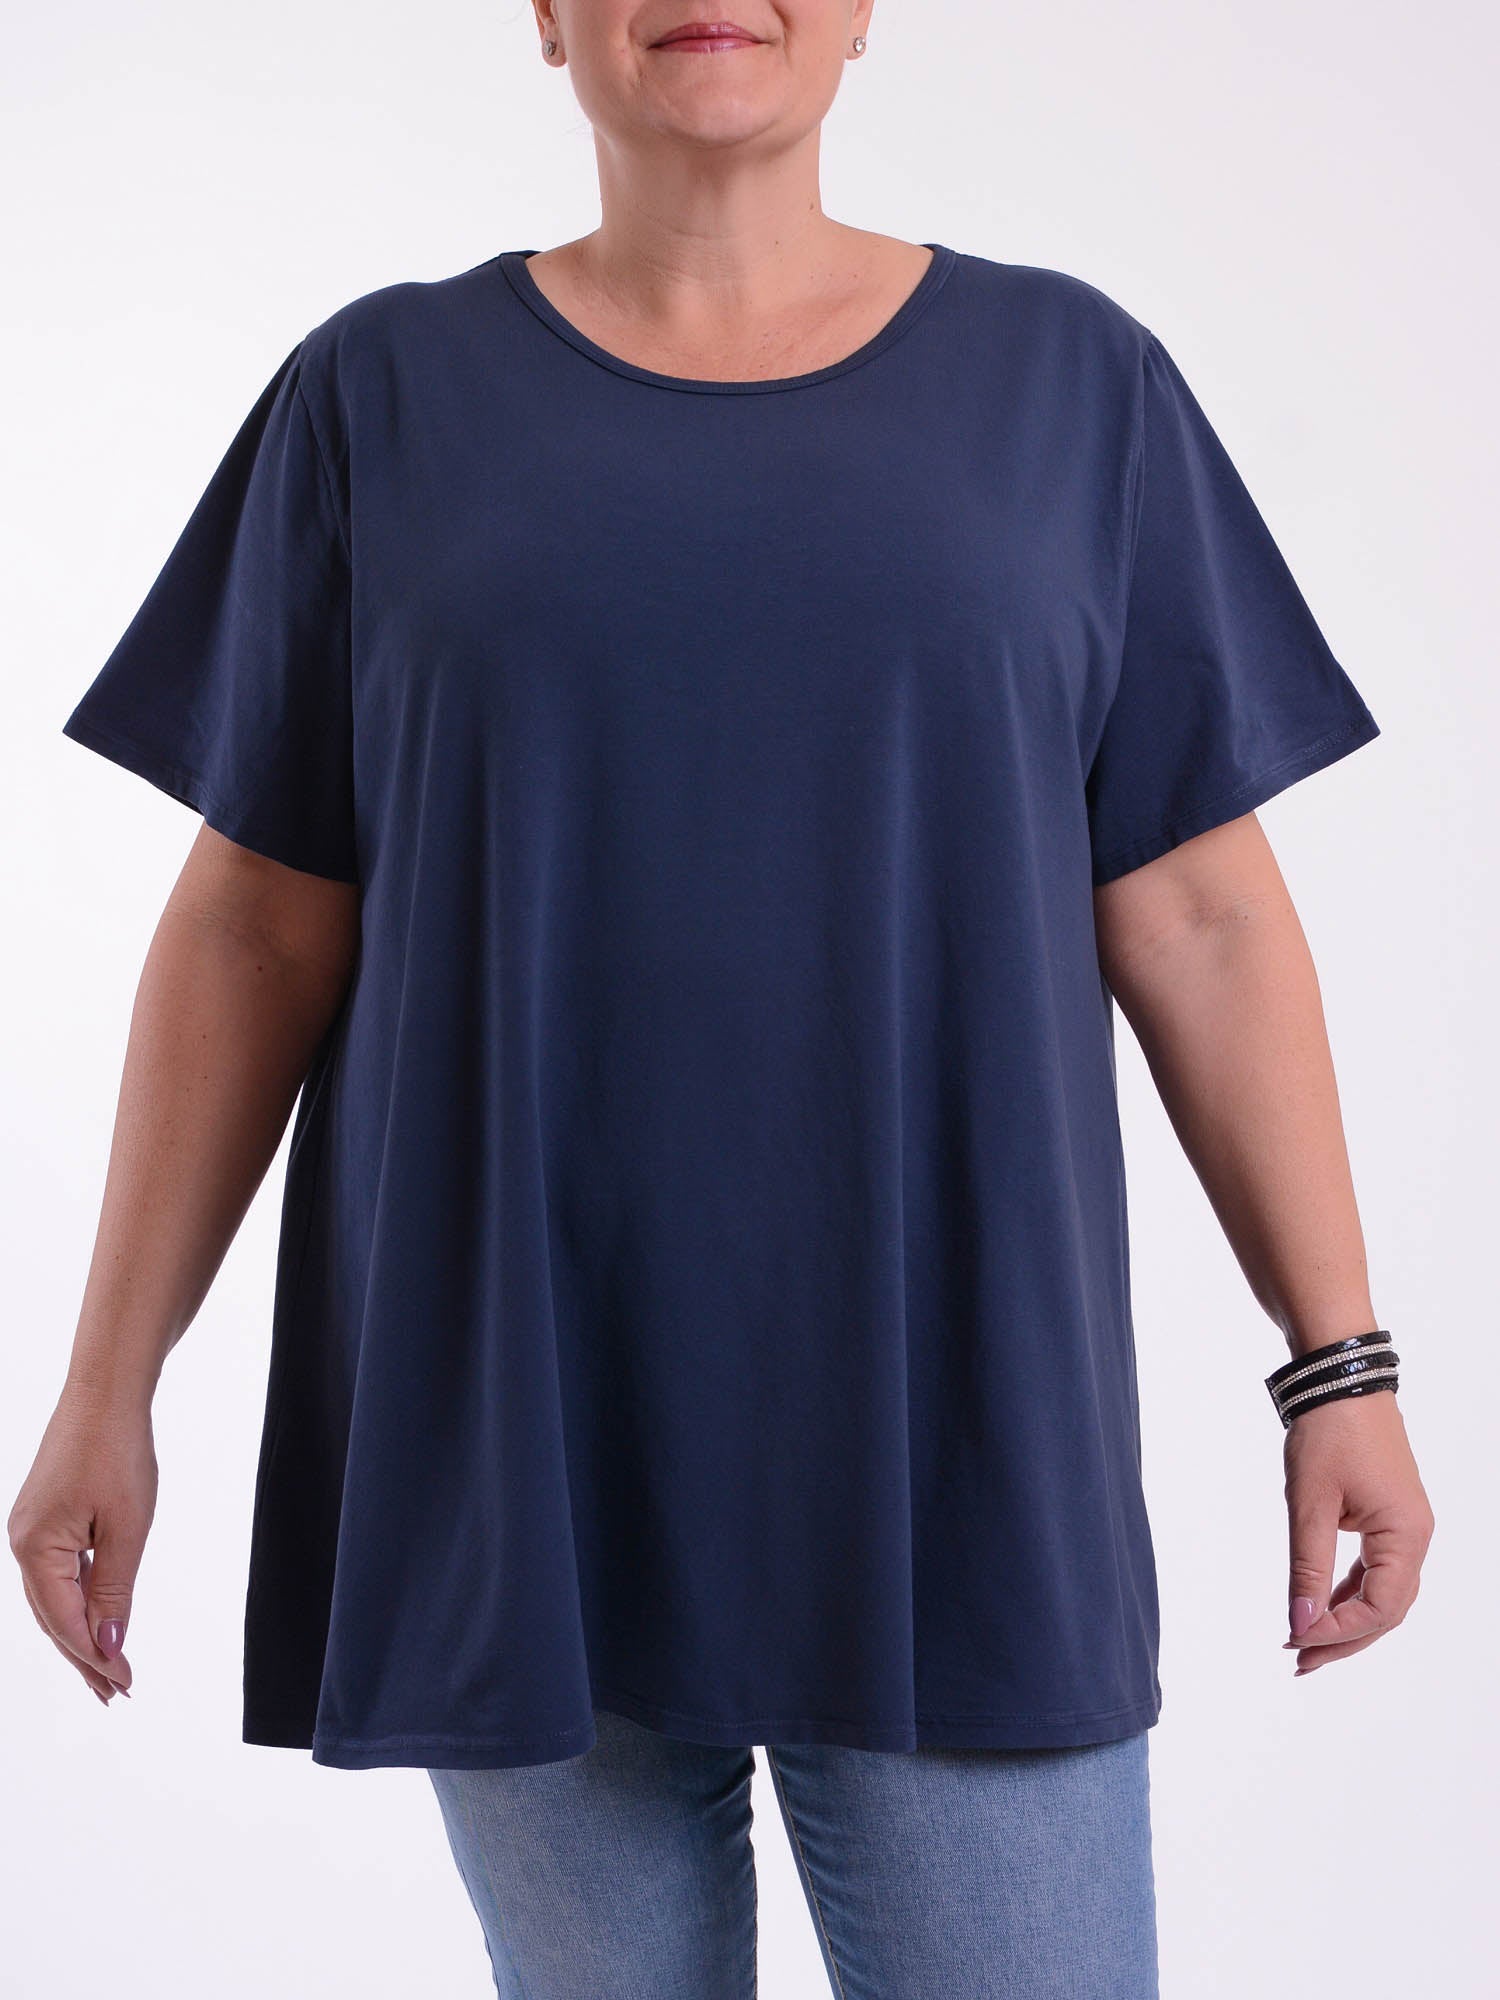 Basic Cotton Swing T Shirt - Round Neck 10516, Tops & Shirts, Pure Plus Clothing, Lagenlook Clothing, Plus Size Fashion, Over 50 Fashion